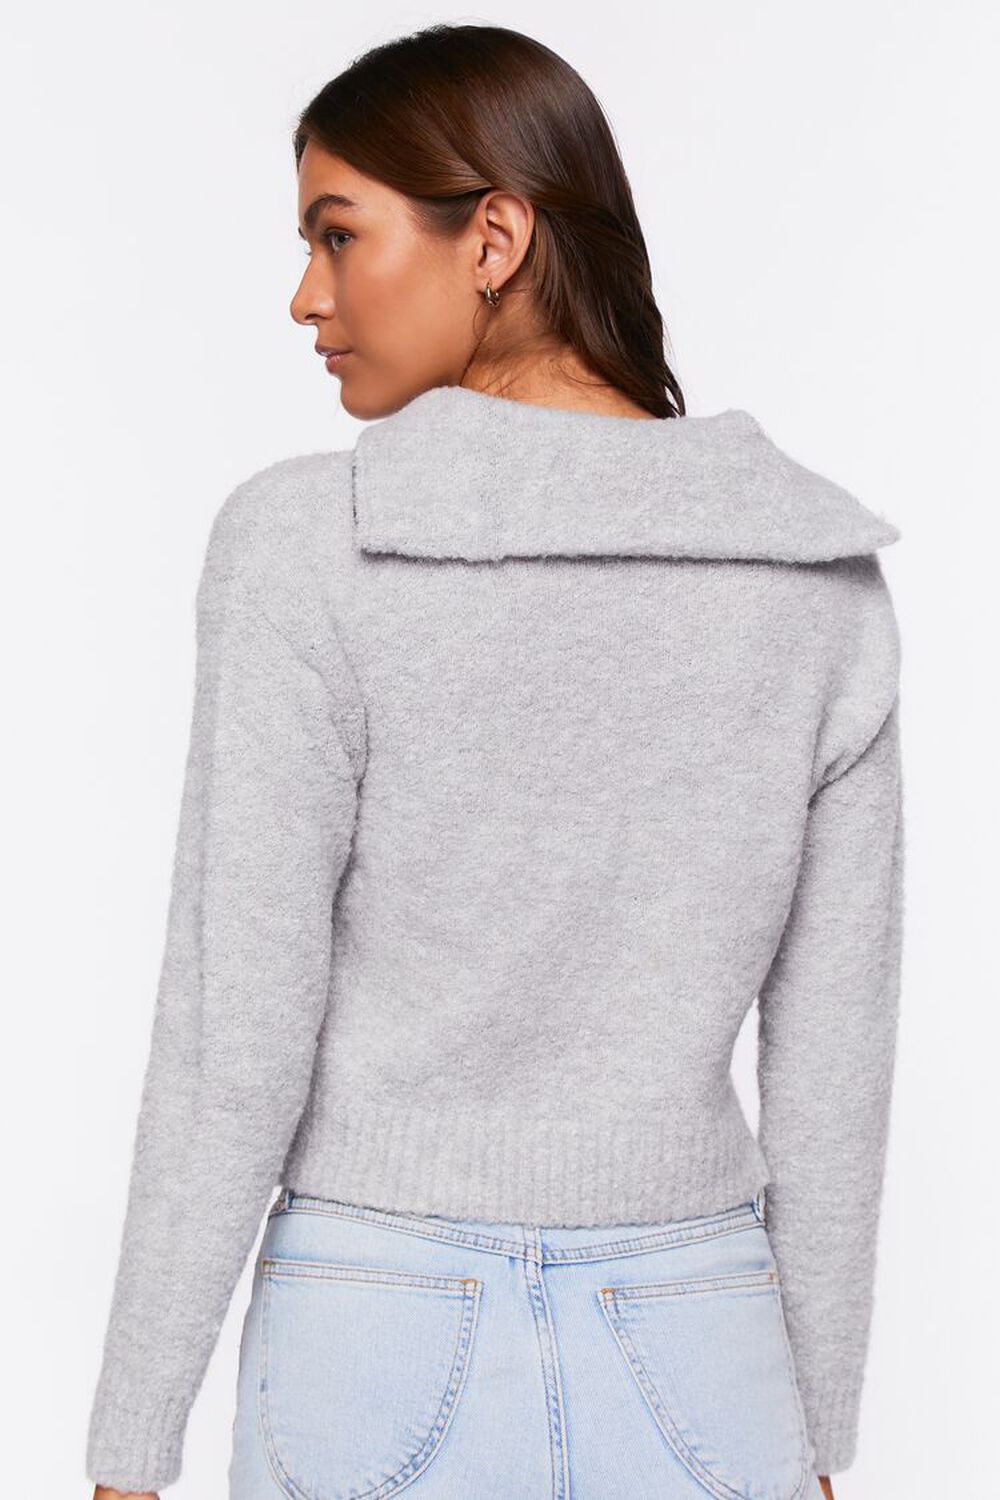 Marled Half-Zip Sweater, image 3